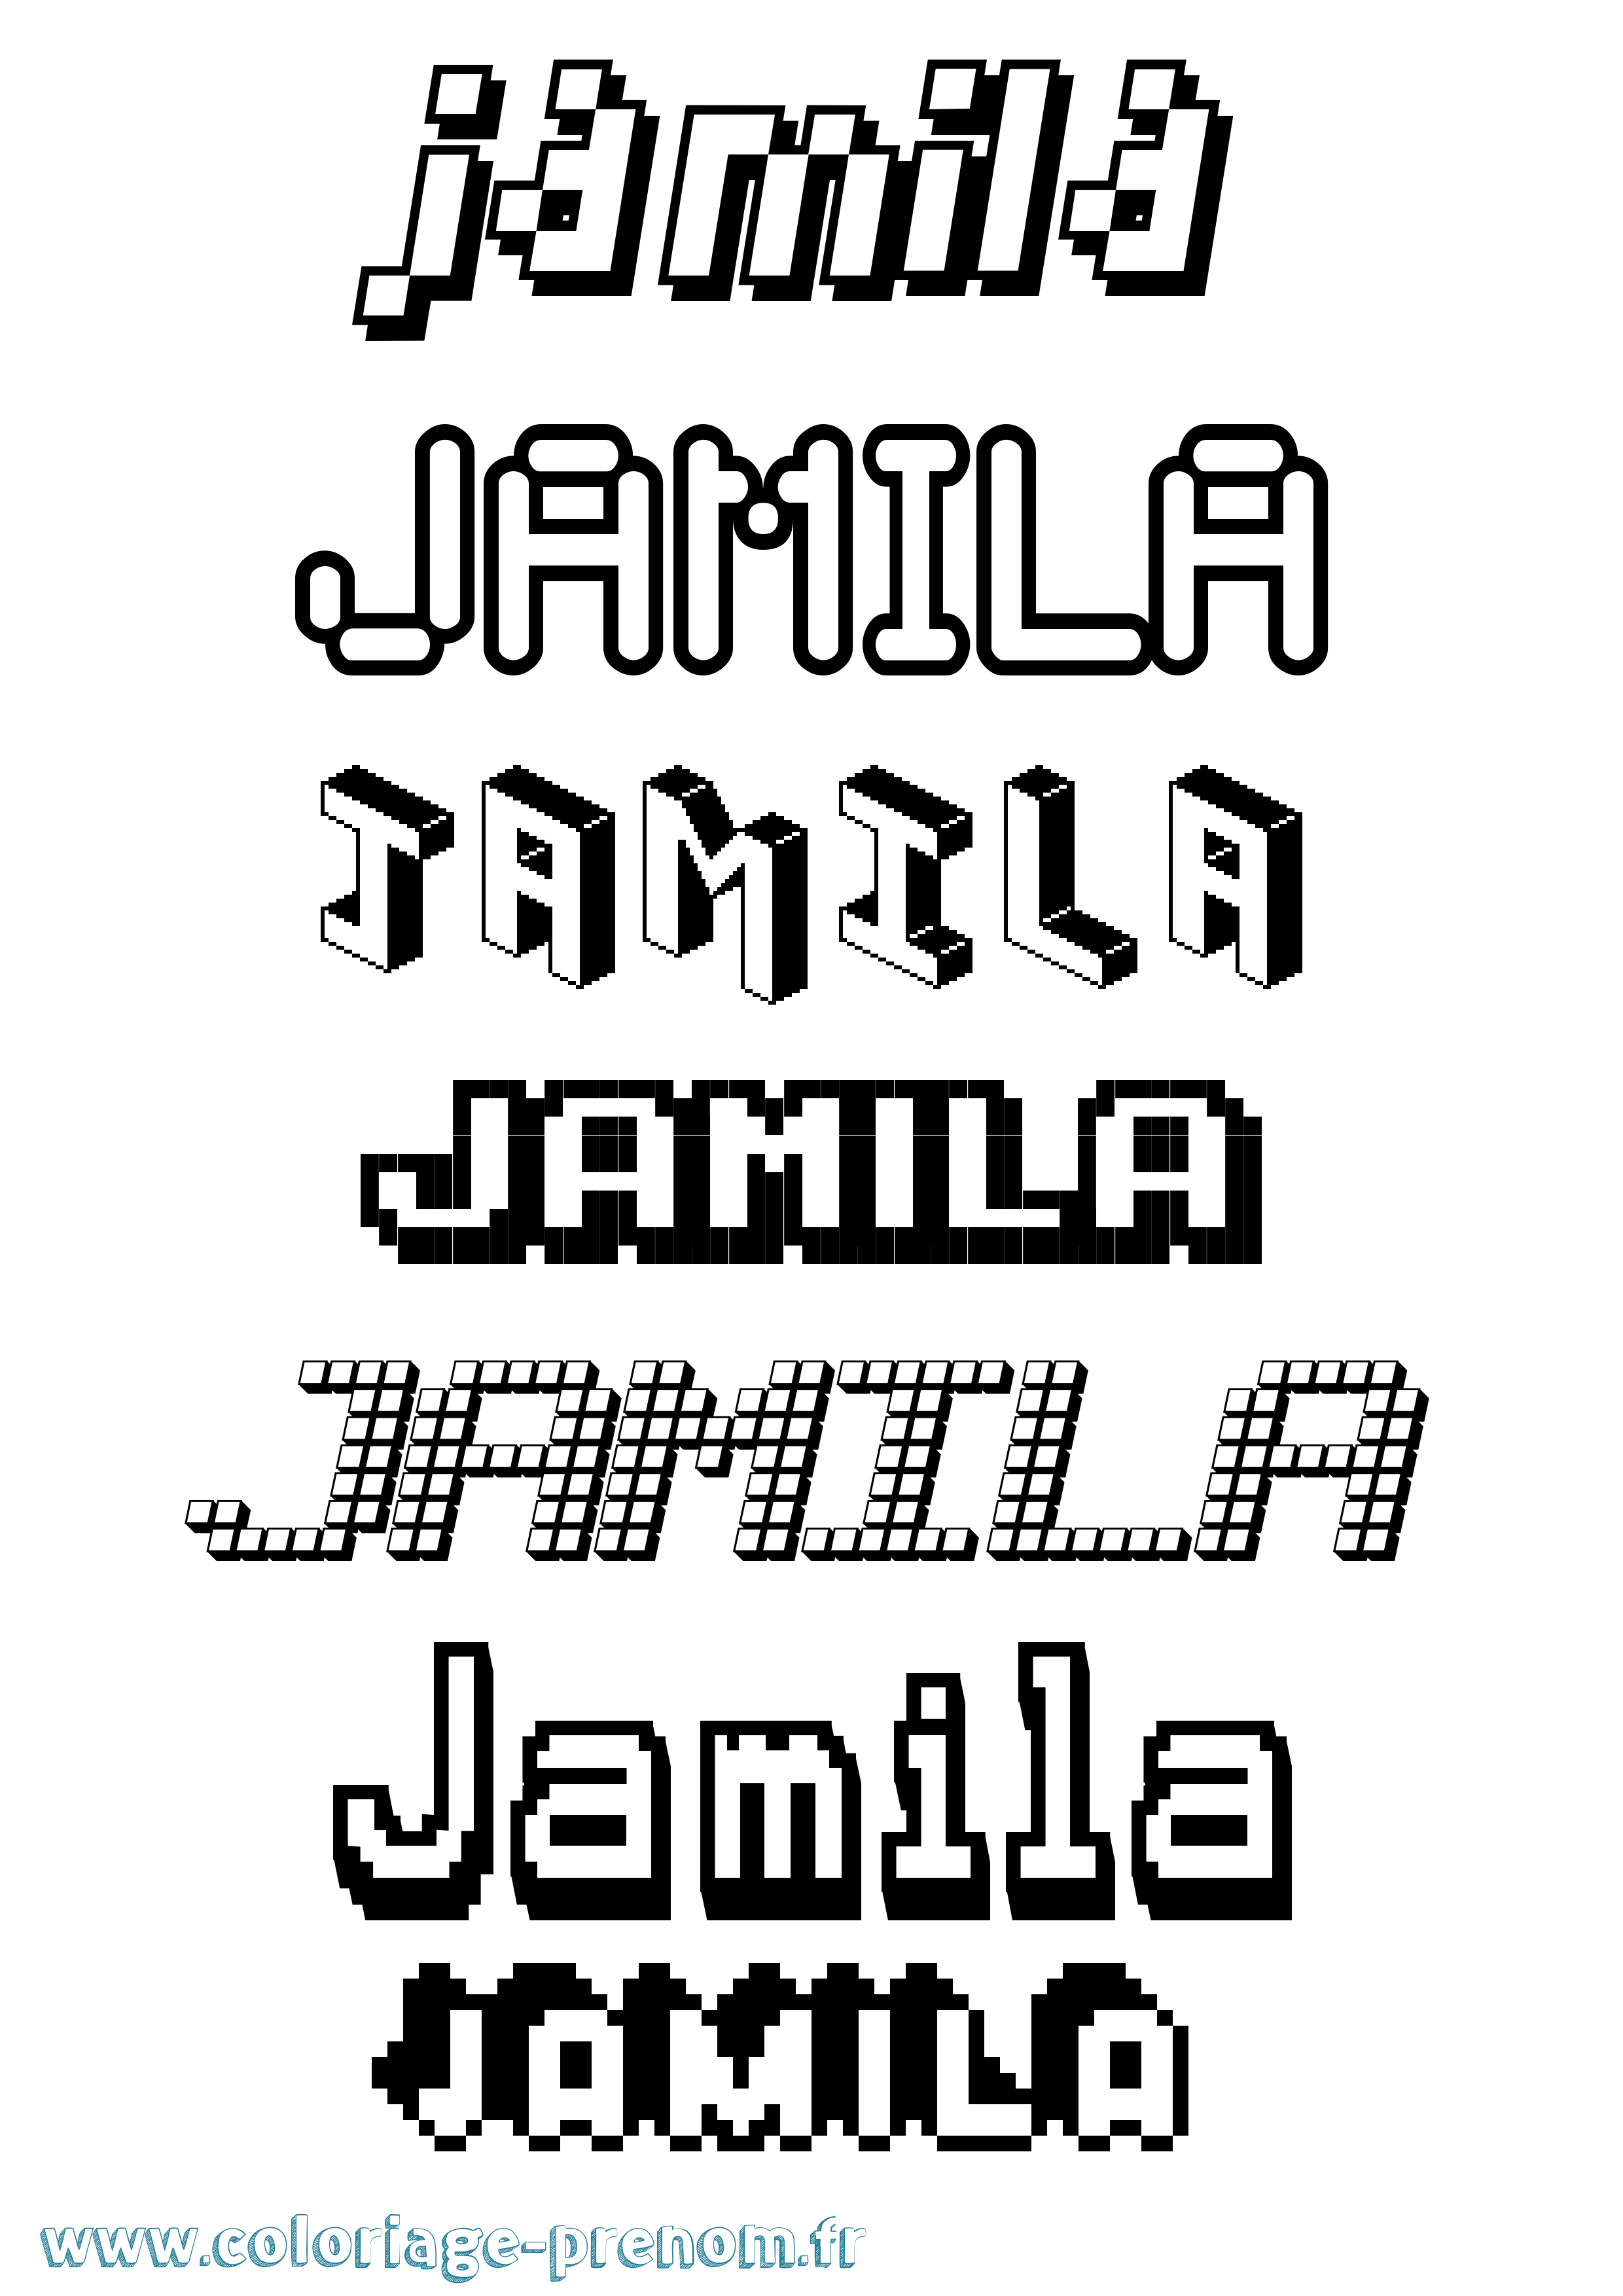 Coloriage prénom Jamila Pixel